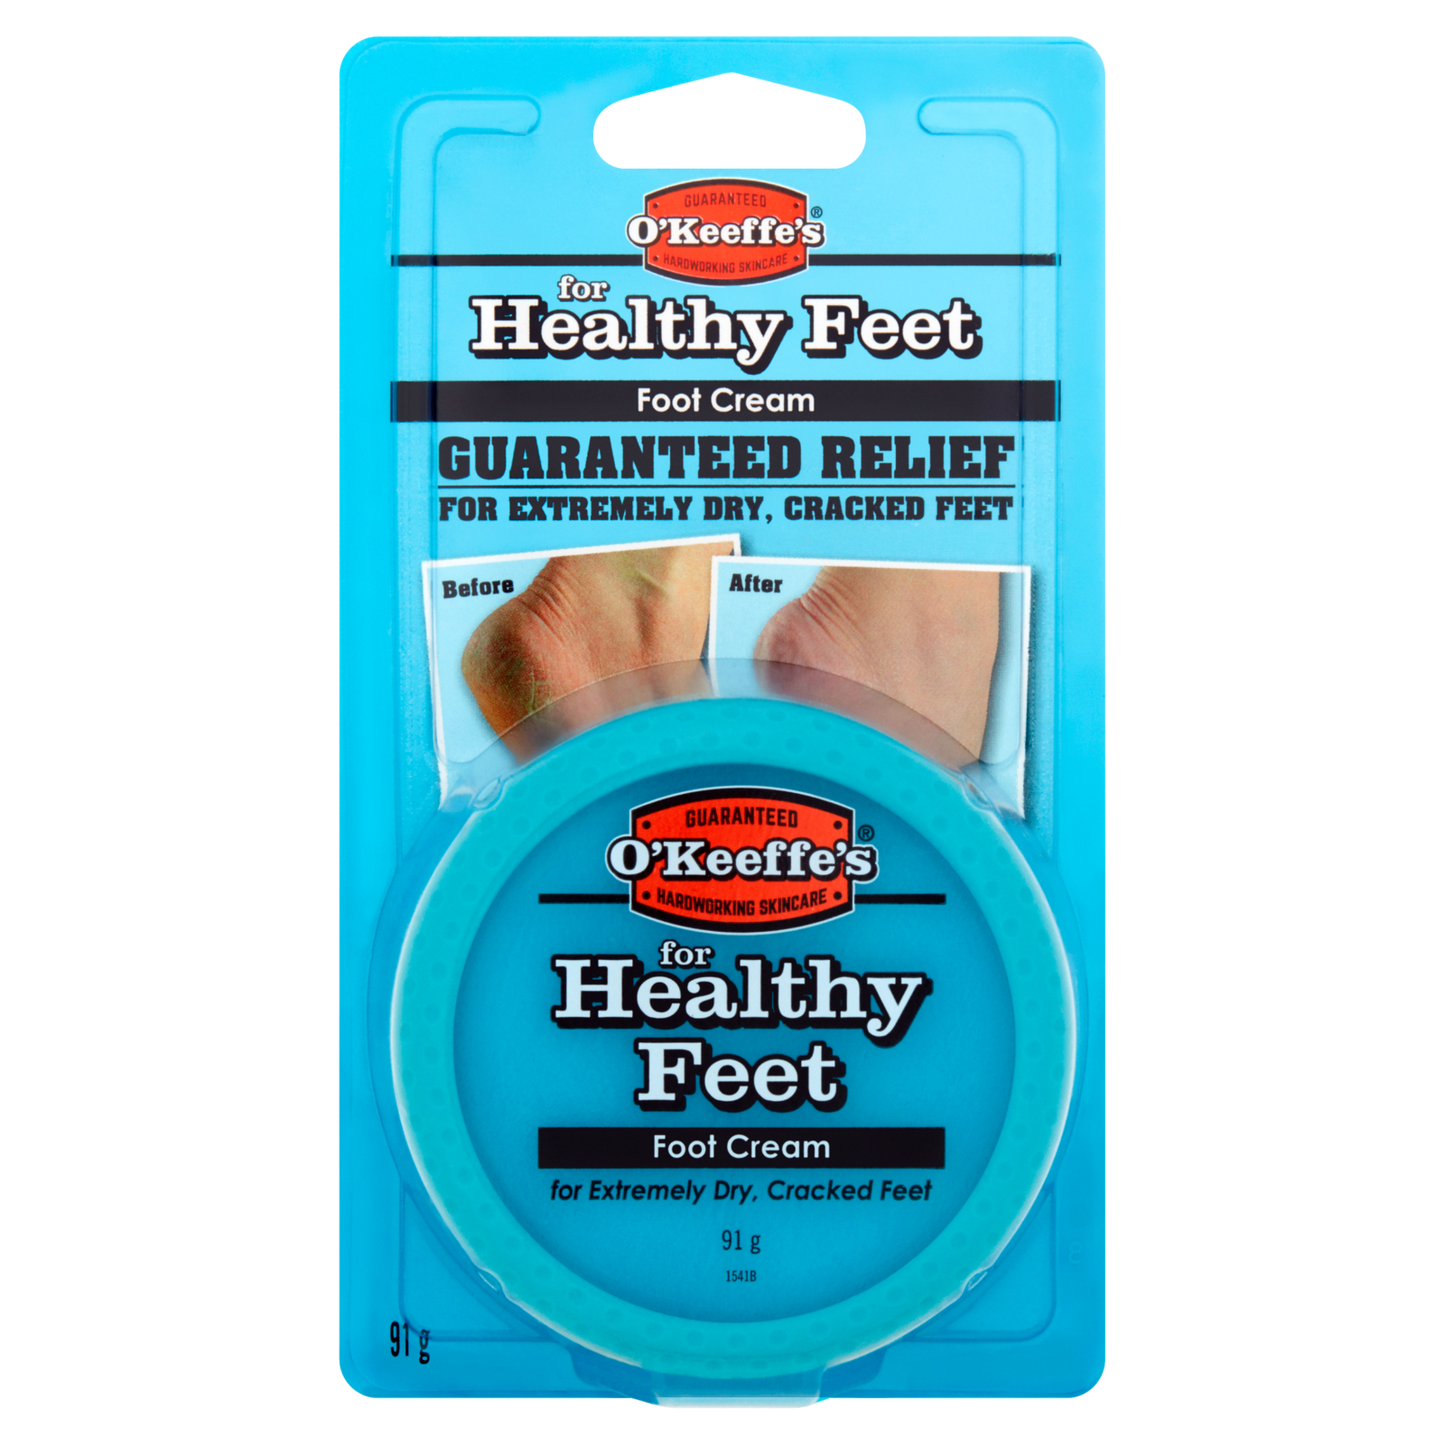 O'Keeffe's for Healthy Feet Foot Cream 91g